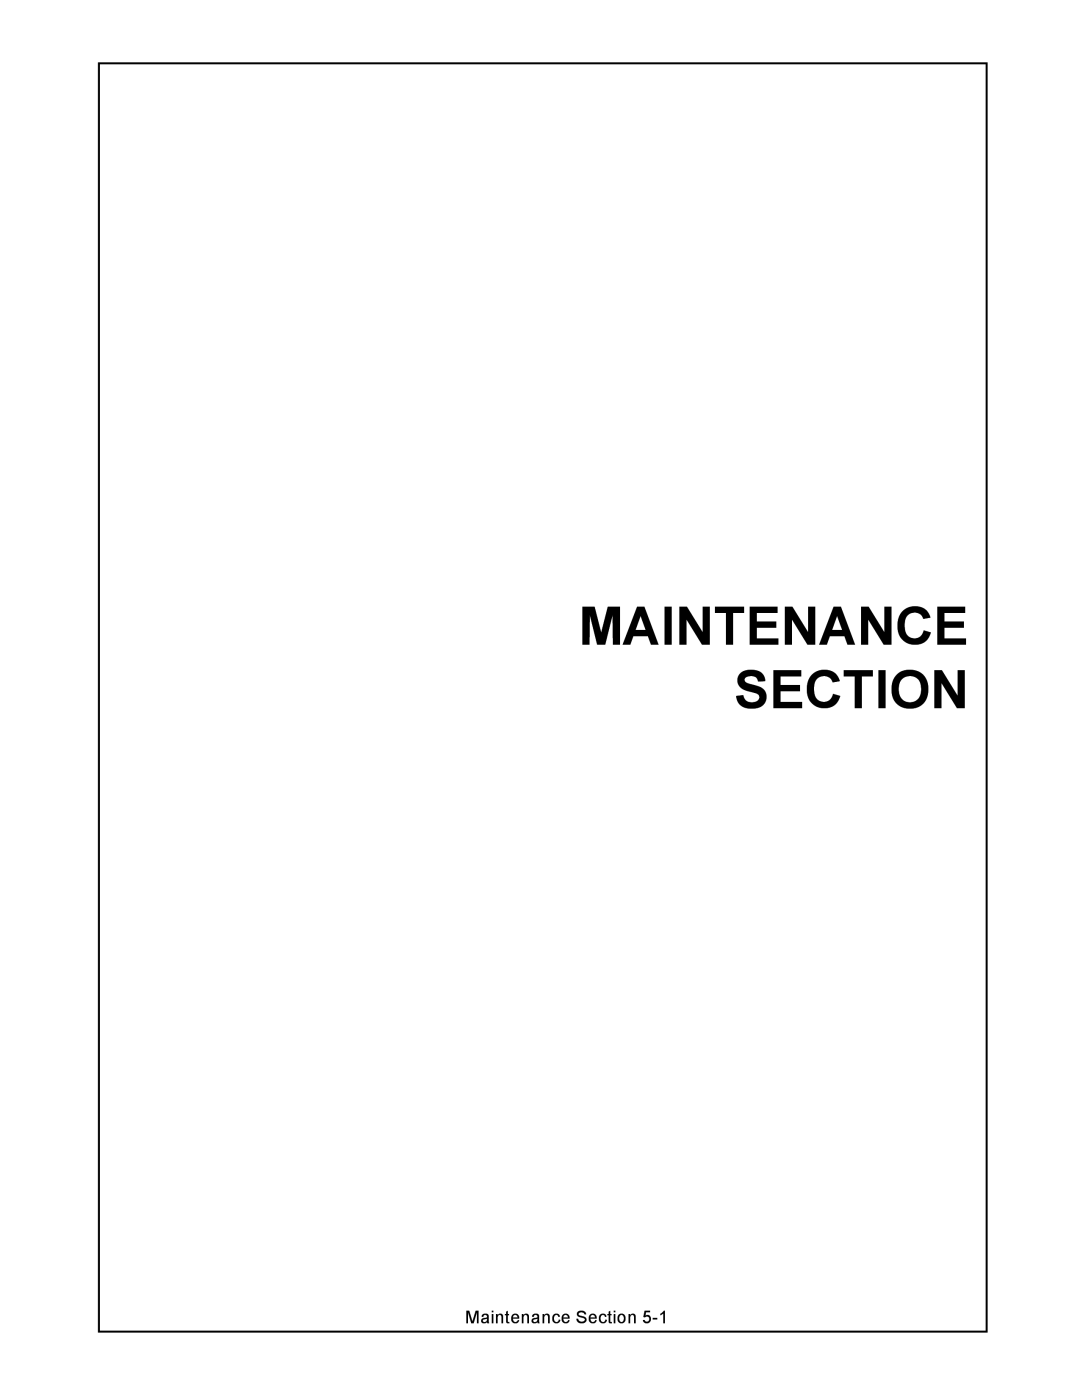 Alamo SR14, SR20 manual Maintenance Section 